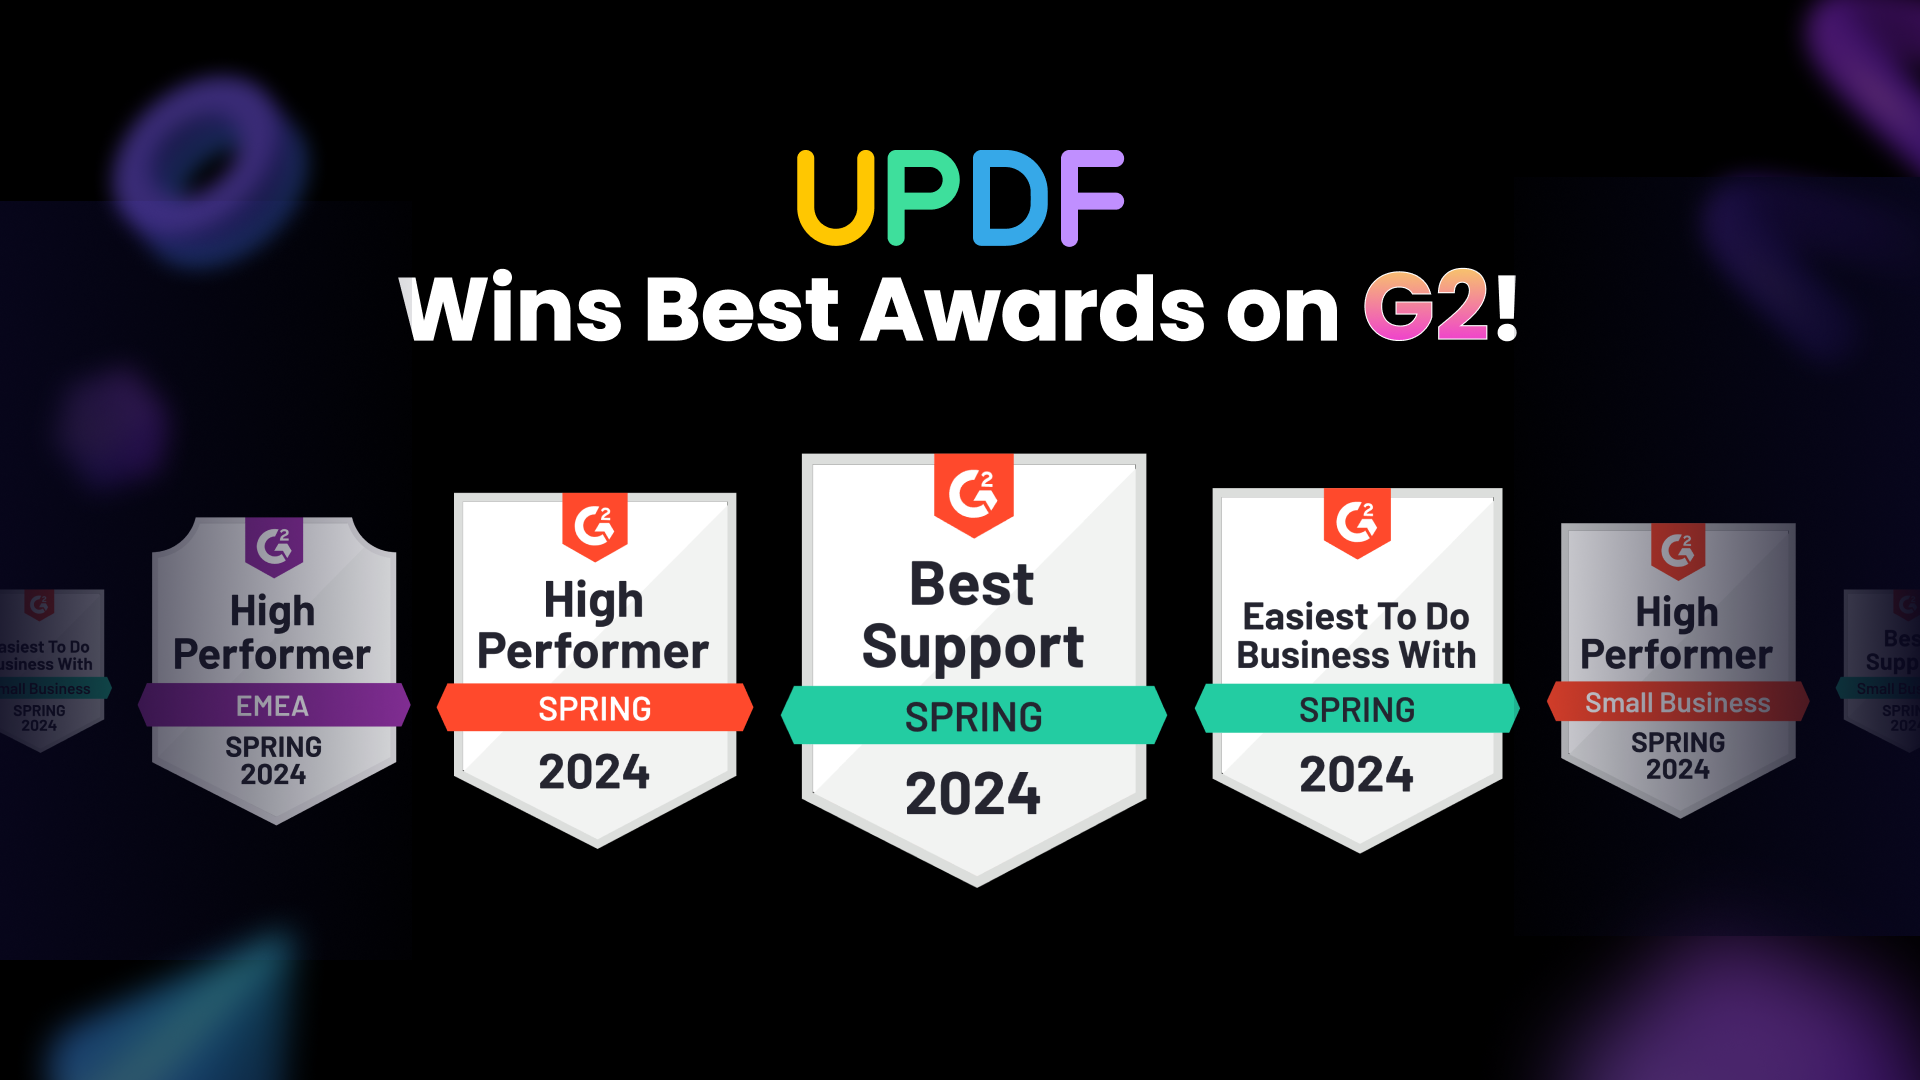 UPDF Wins Best Awards on G2 Spring 2024 Report